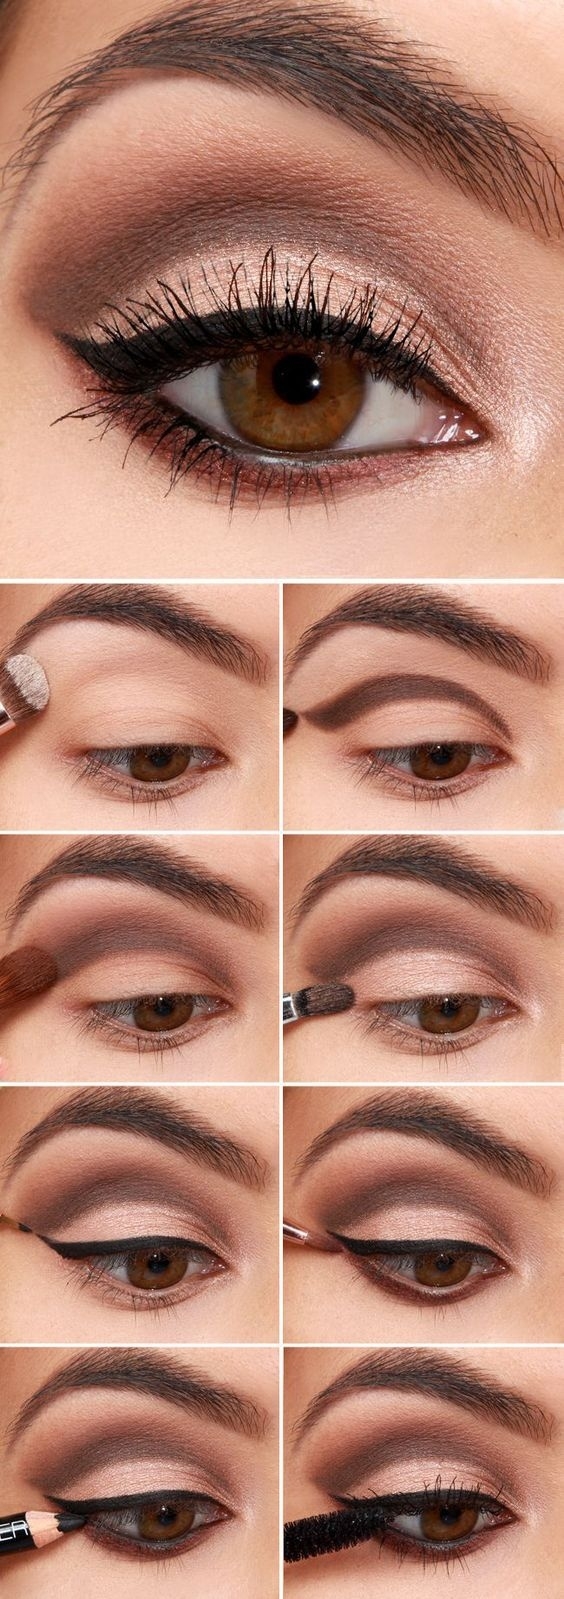 32 Easy Step By Step Eyeshadow Tutorials For Beginners | Makeup with regard to Eyeshadow Makeup Step By Step